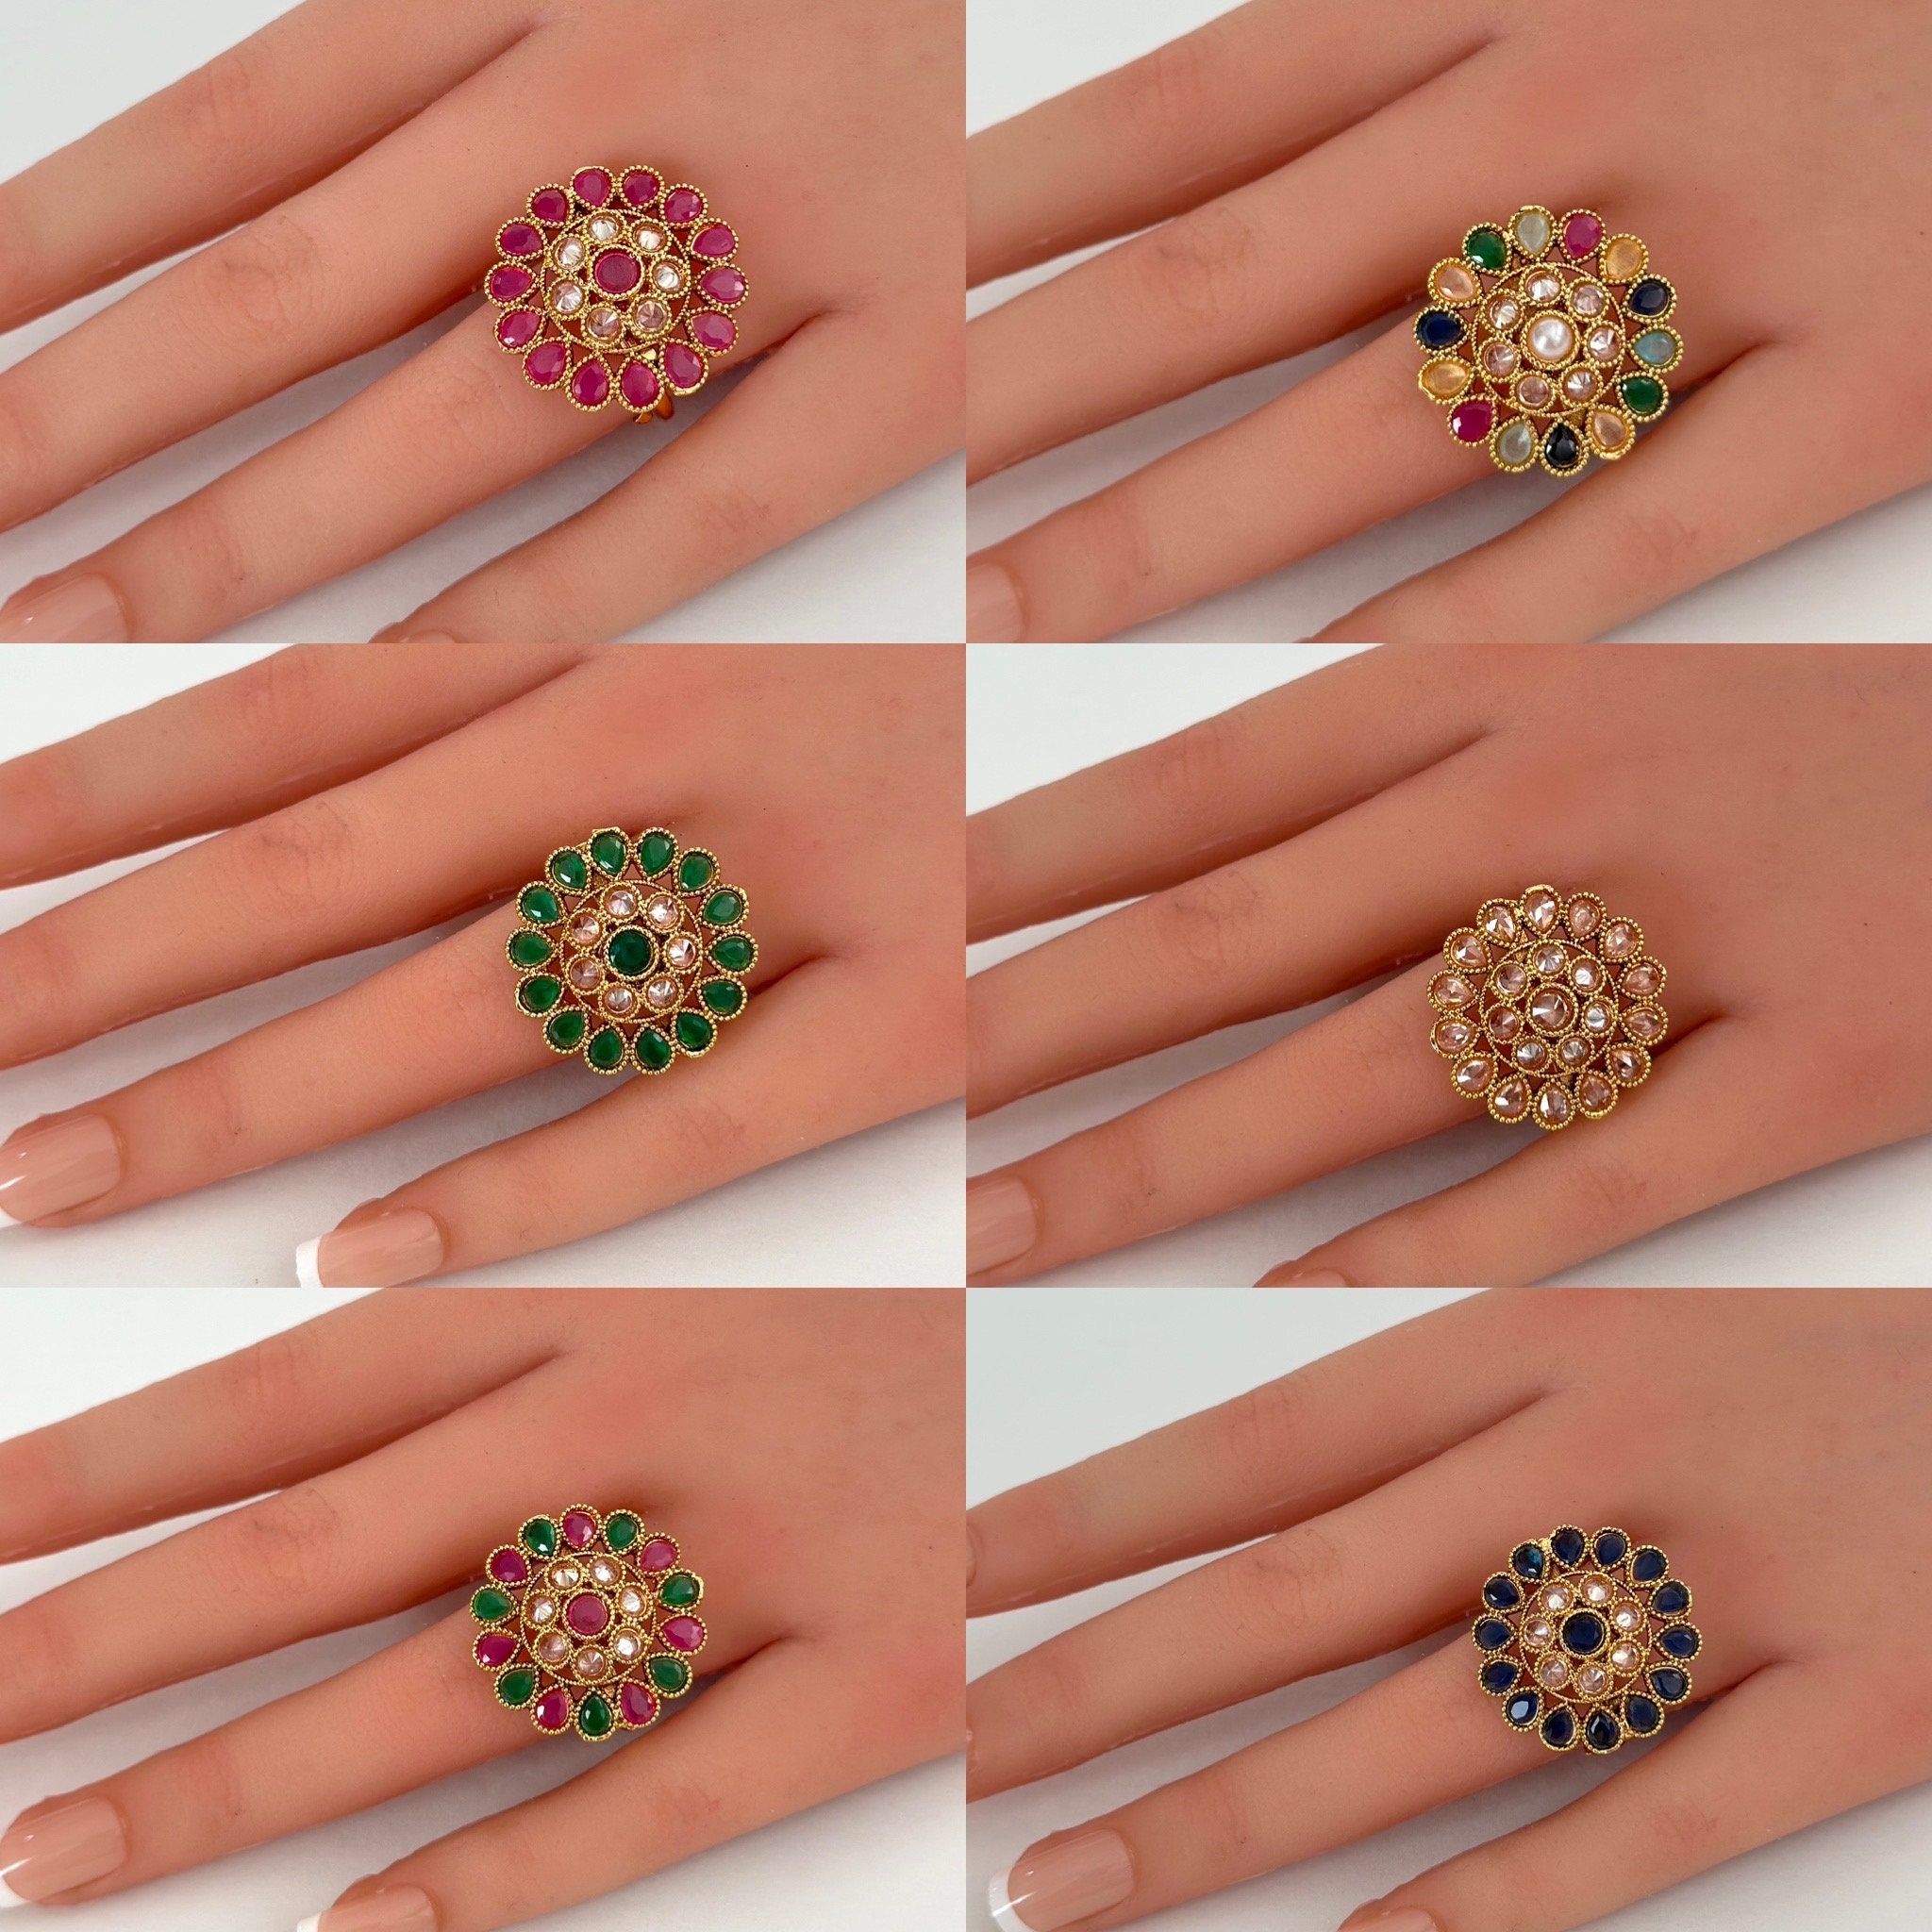 Taliyah Diamond Ring | Buy a Diamond Ring Online - Dishis Jewels